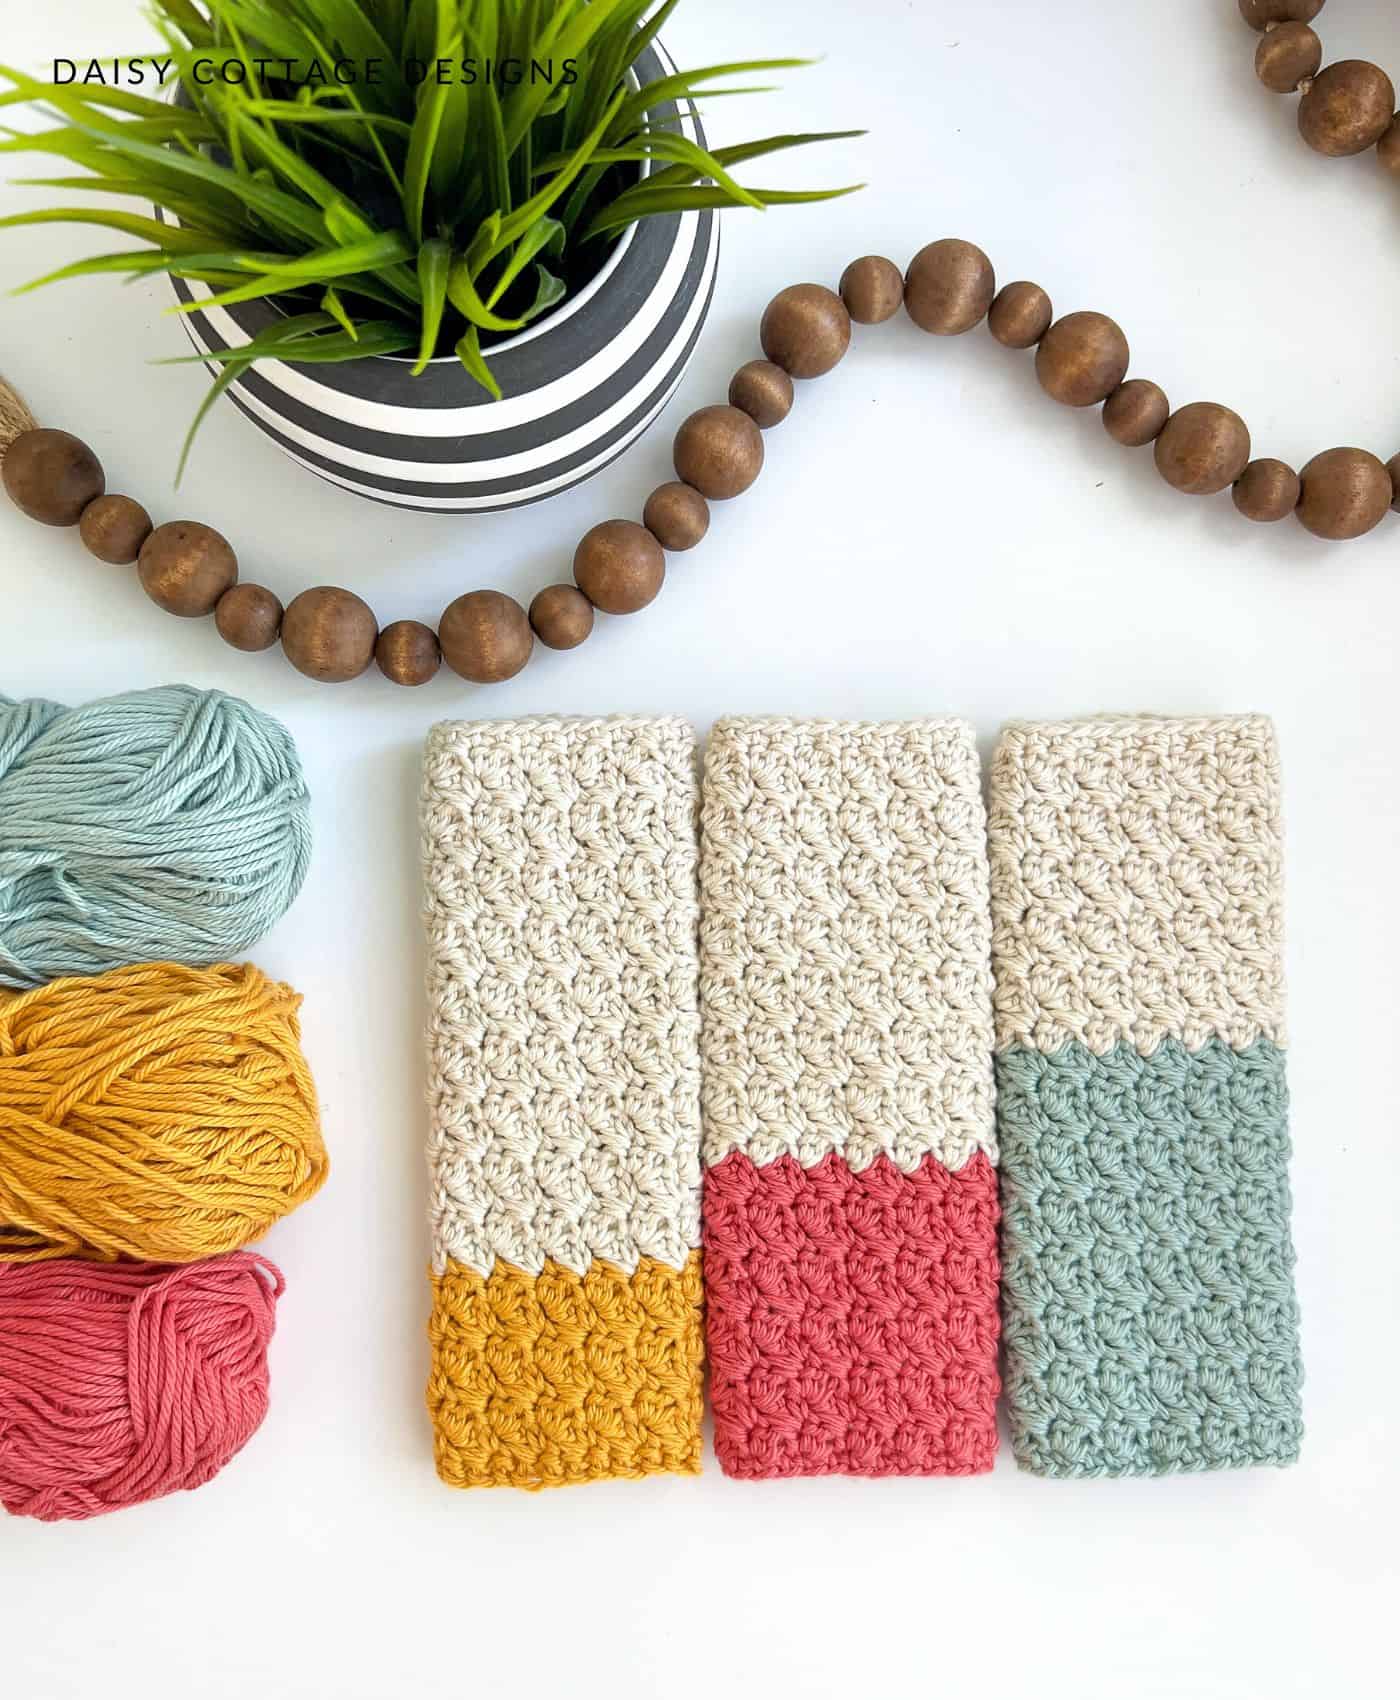 Suzette Stitch Crochet Dishcloth